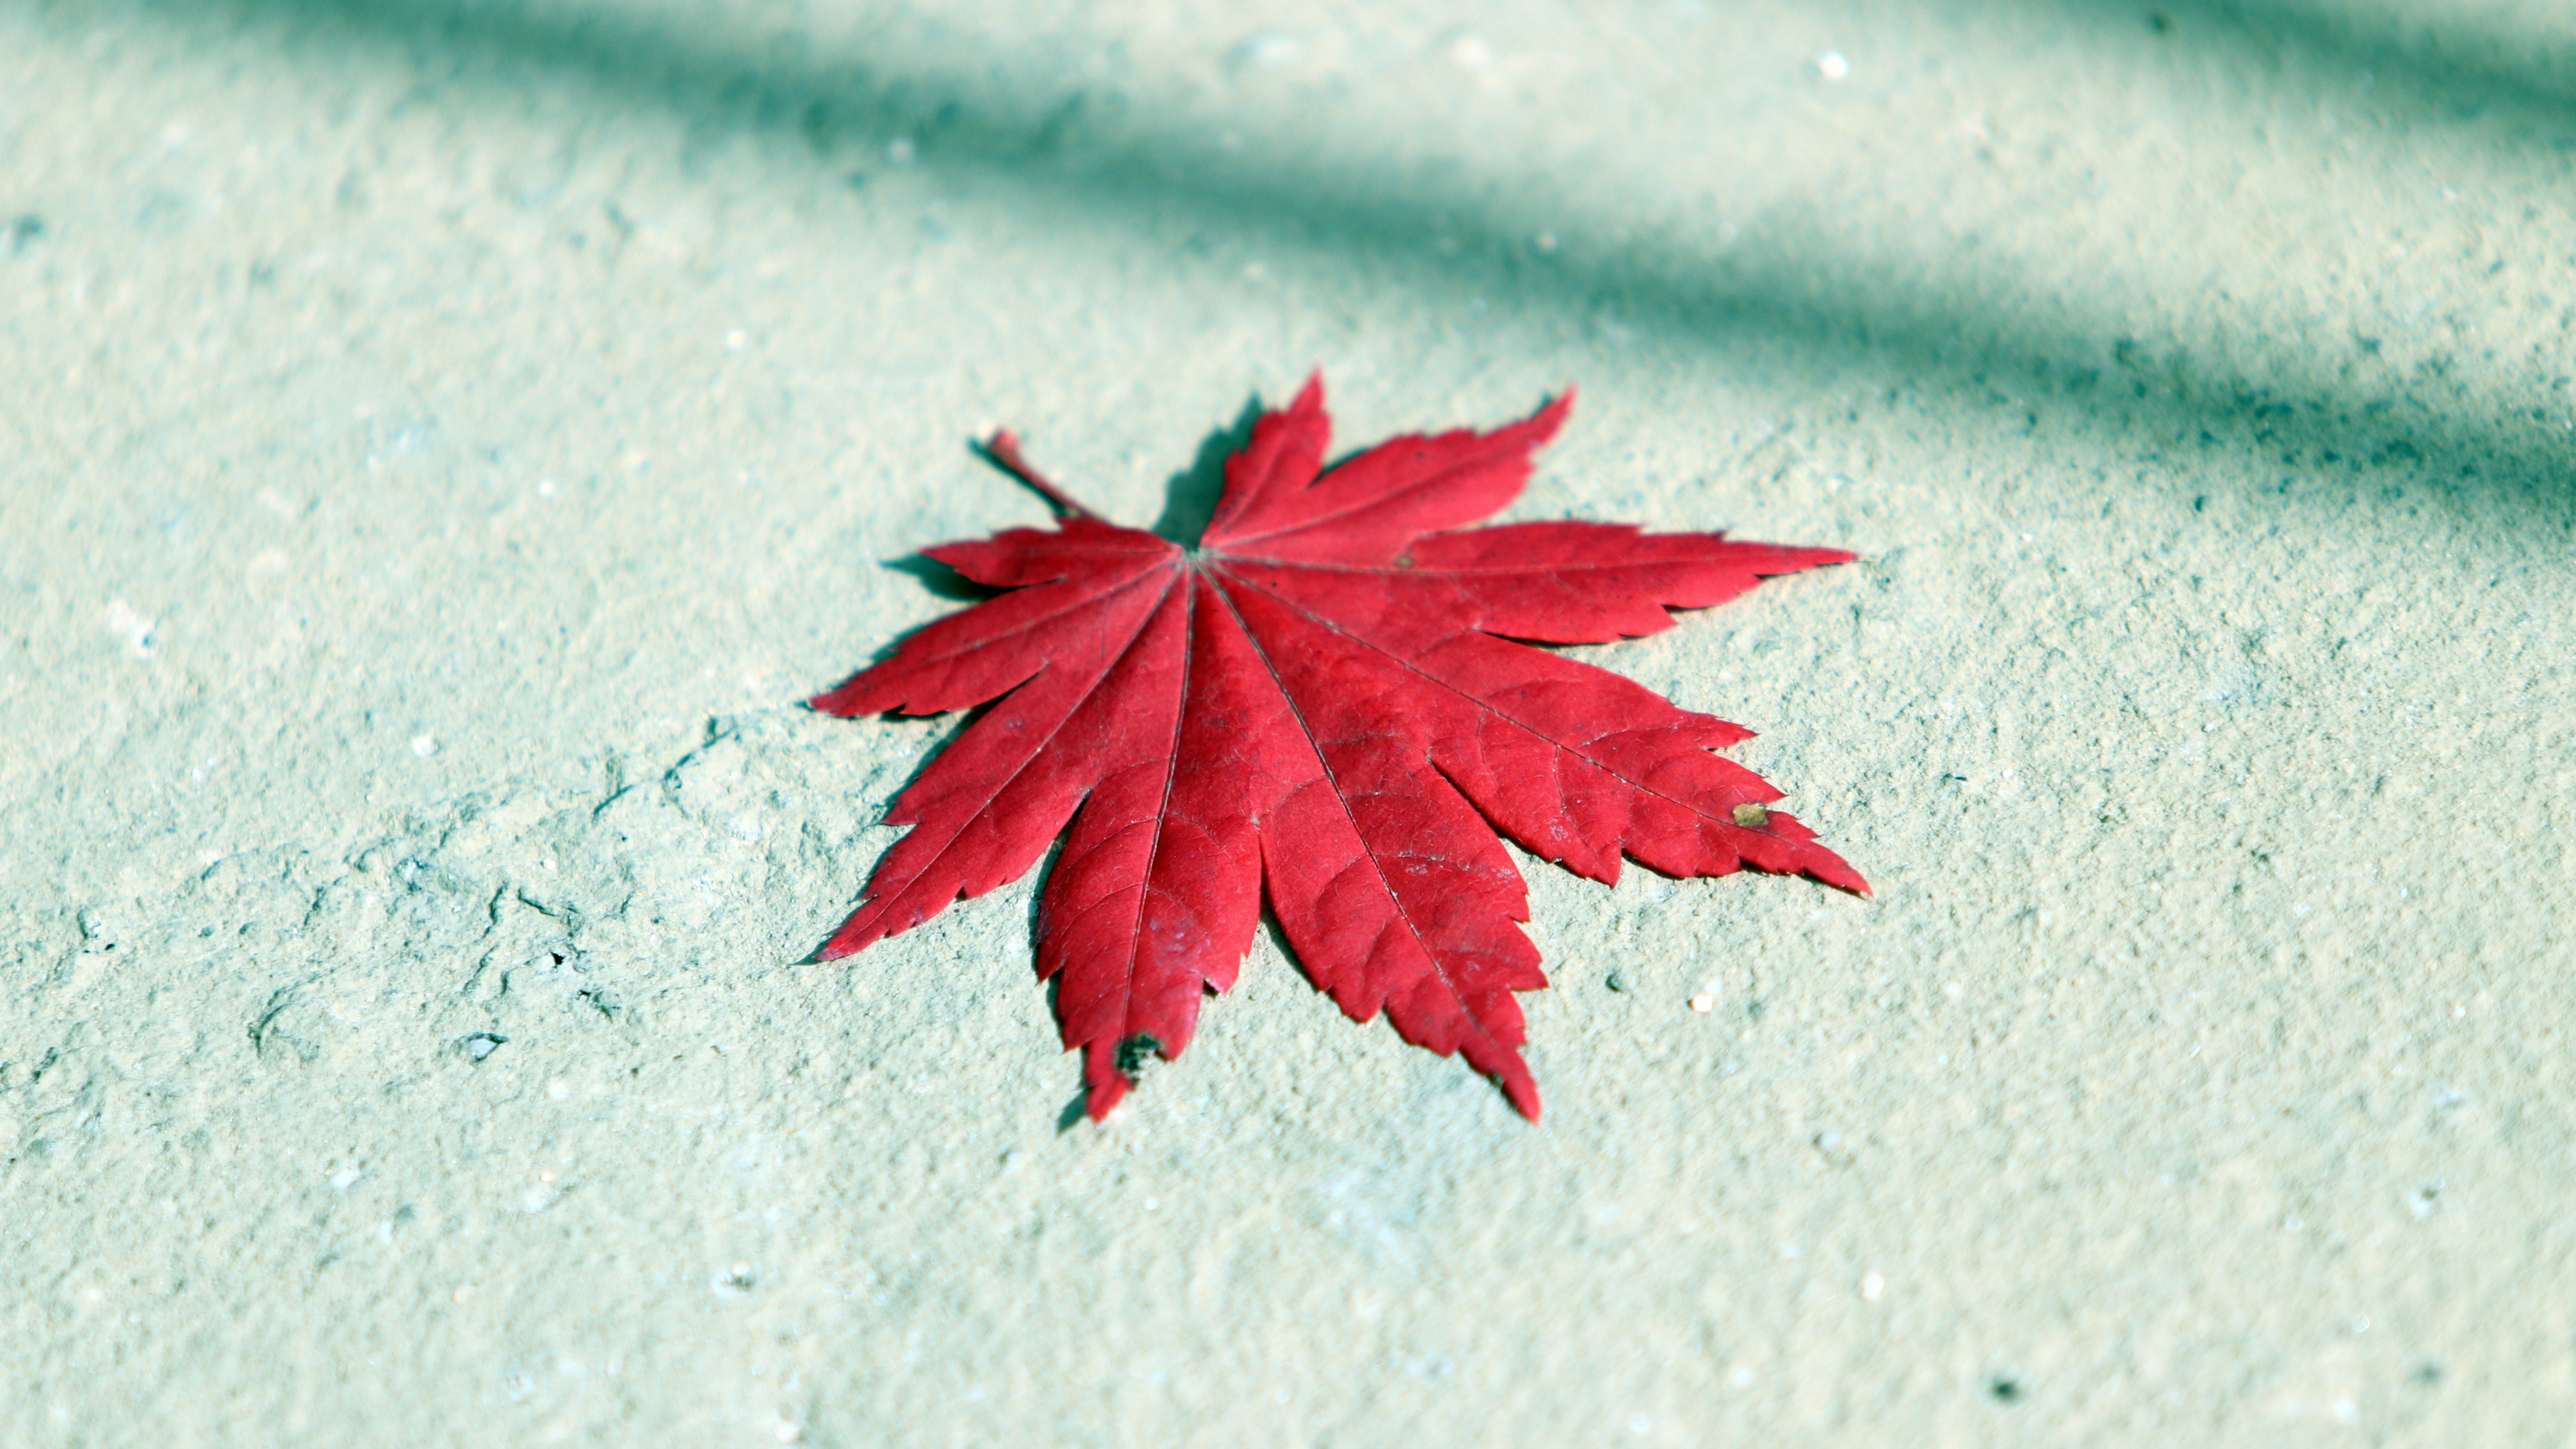 Autumn maple leaf, Red beauty, 4K UHD, Widescreen wallpaper, 3840x2160 4K Desktop